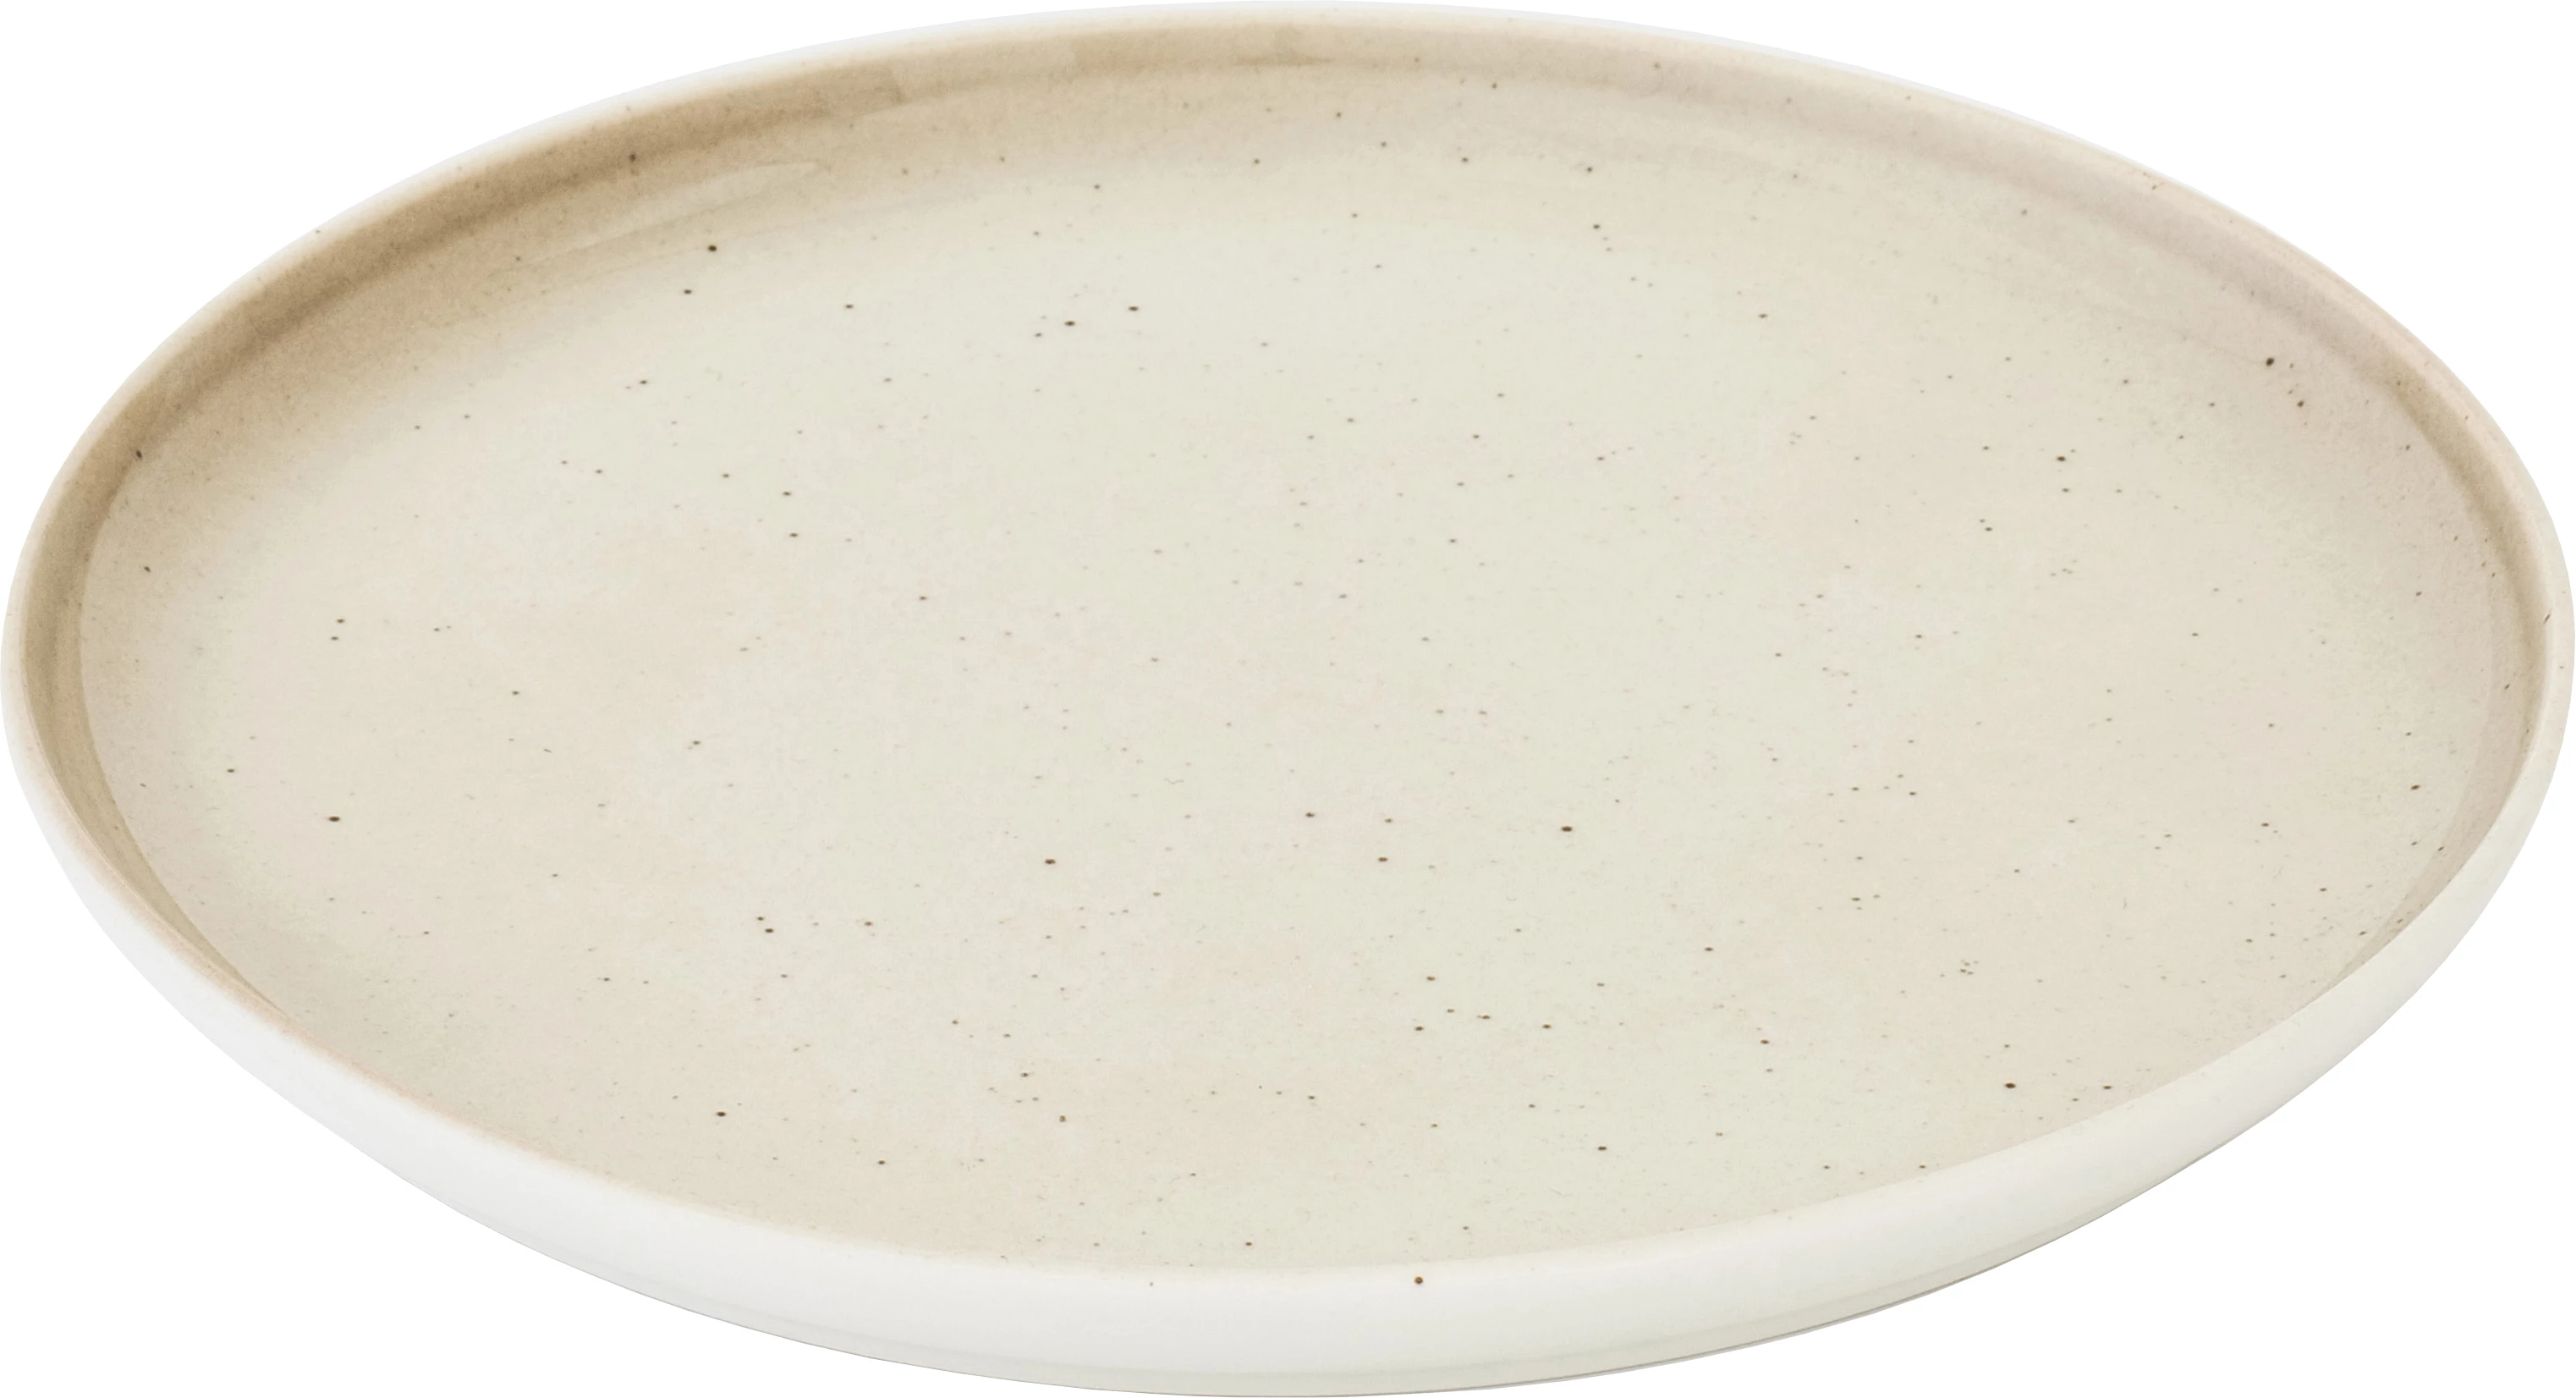 Figgjo Ela tallerken, uden fane, sand, ø23 cm